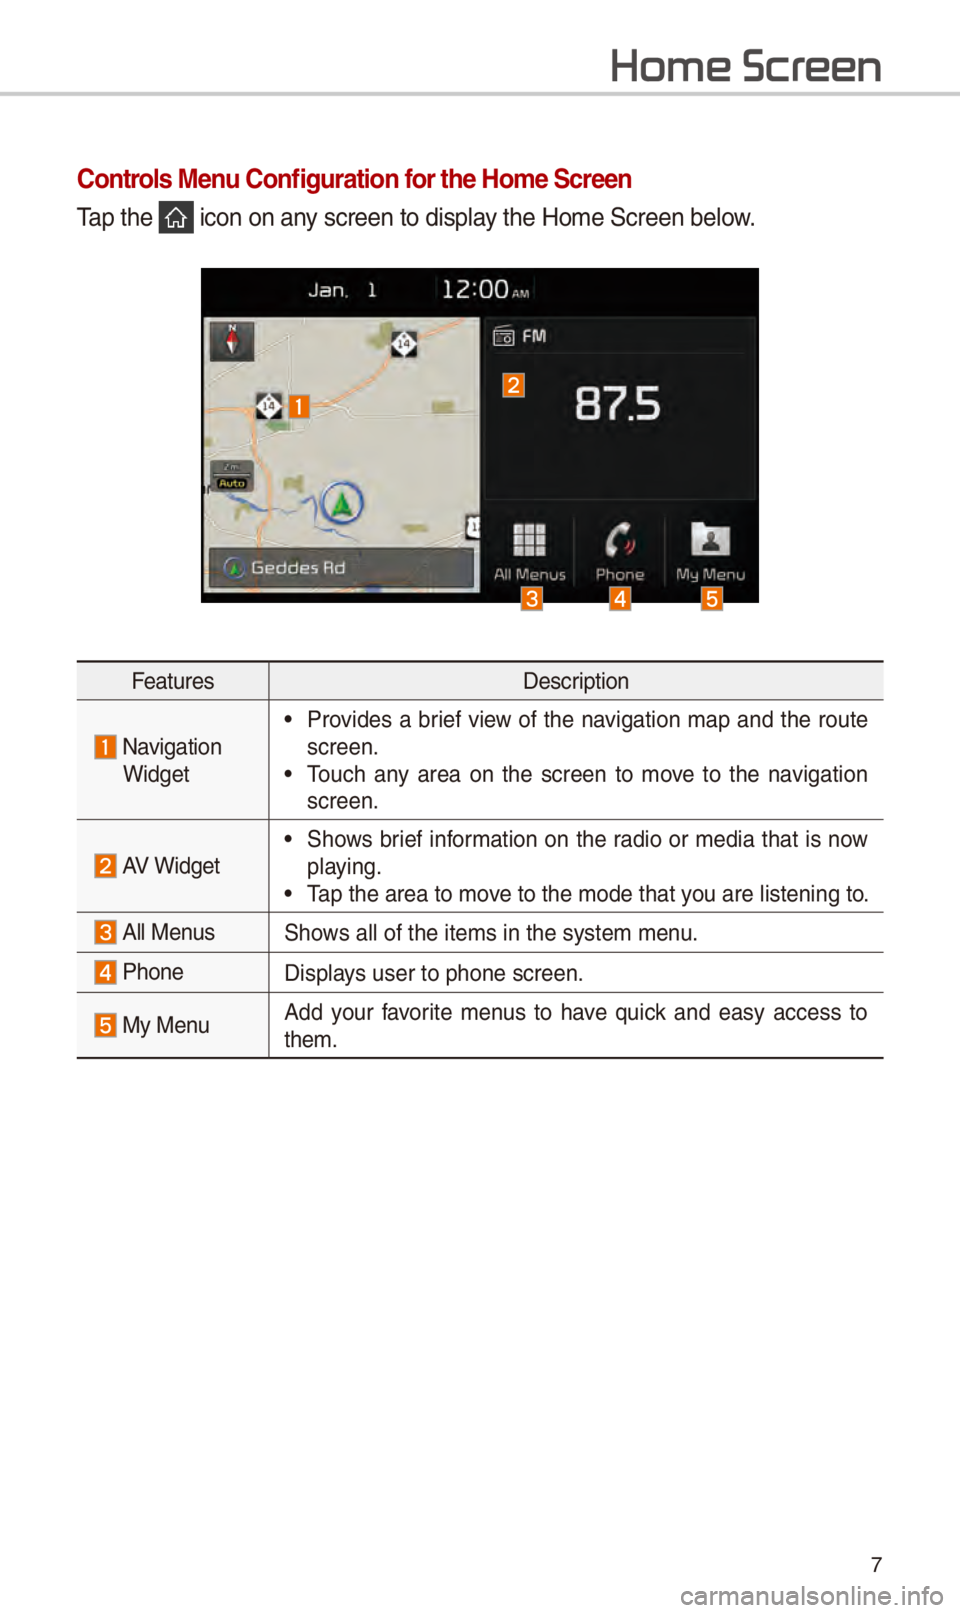 KIA SPORTAGE 2018  Navigation System Quick Reference Guide 7
Home Scr
Controls Menu Configuration for the Home Screen
Tap th\f  icon on any scr\f\fn to display th\f \bom\f Scr\f\fn b\flo\Sw.
F\fatur\fsD\fscription
 Navigation 
Widg\ft
• Provid\fs a bri\ff v